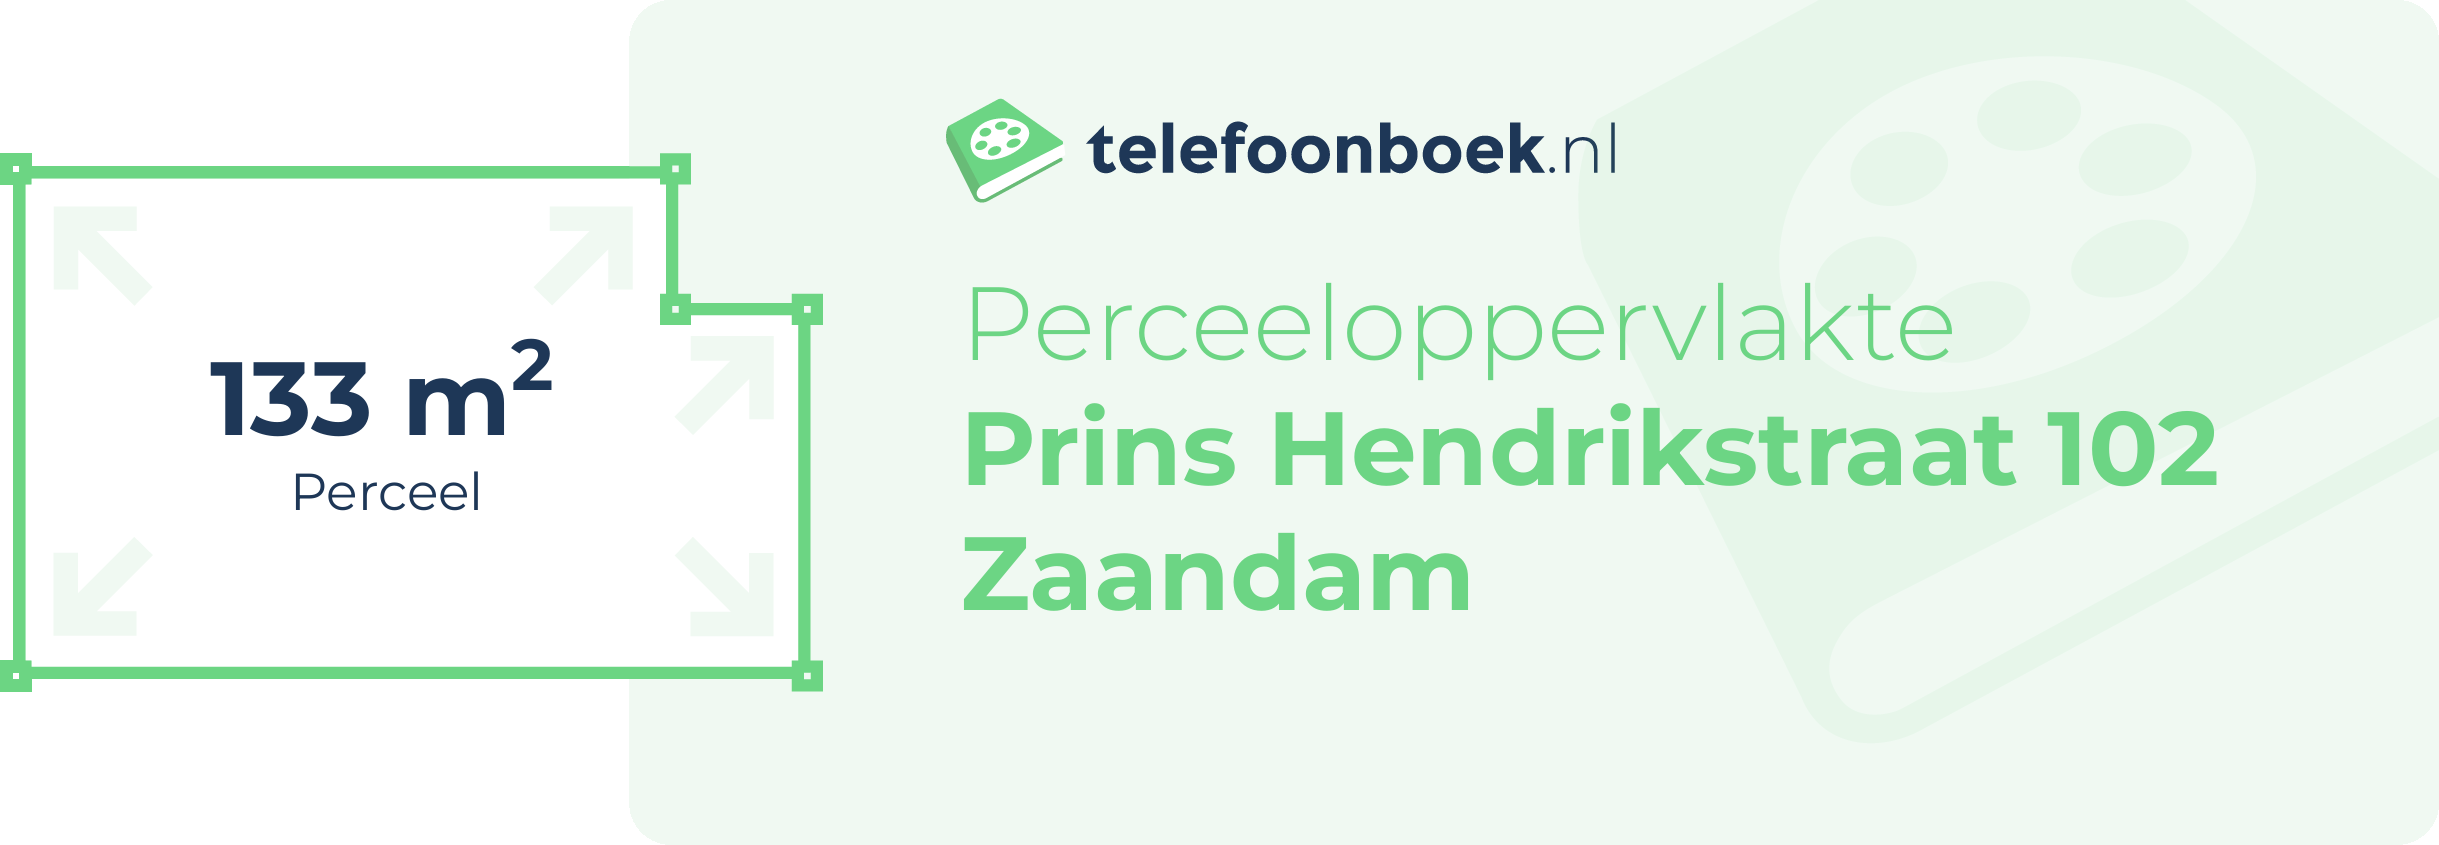 Perceeloppervlakte Prins Hendrikstraat 102 Zaandam